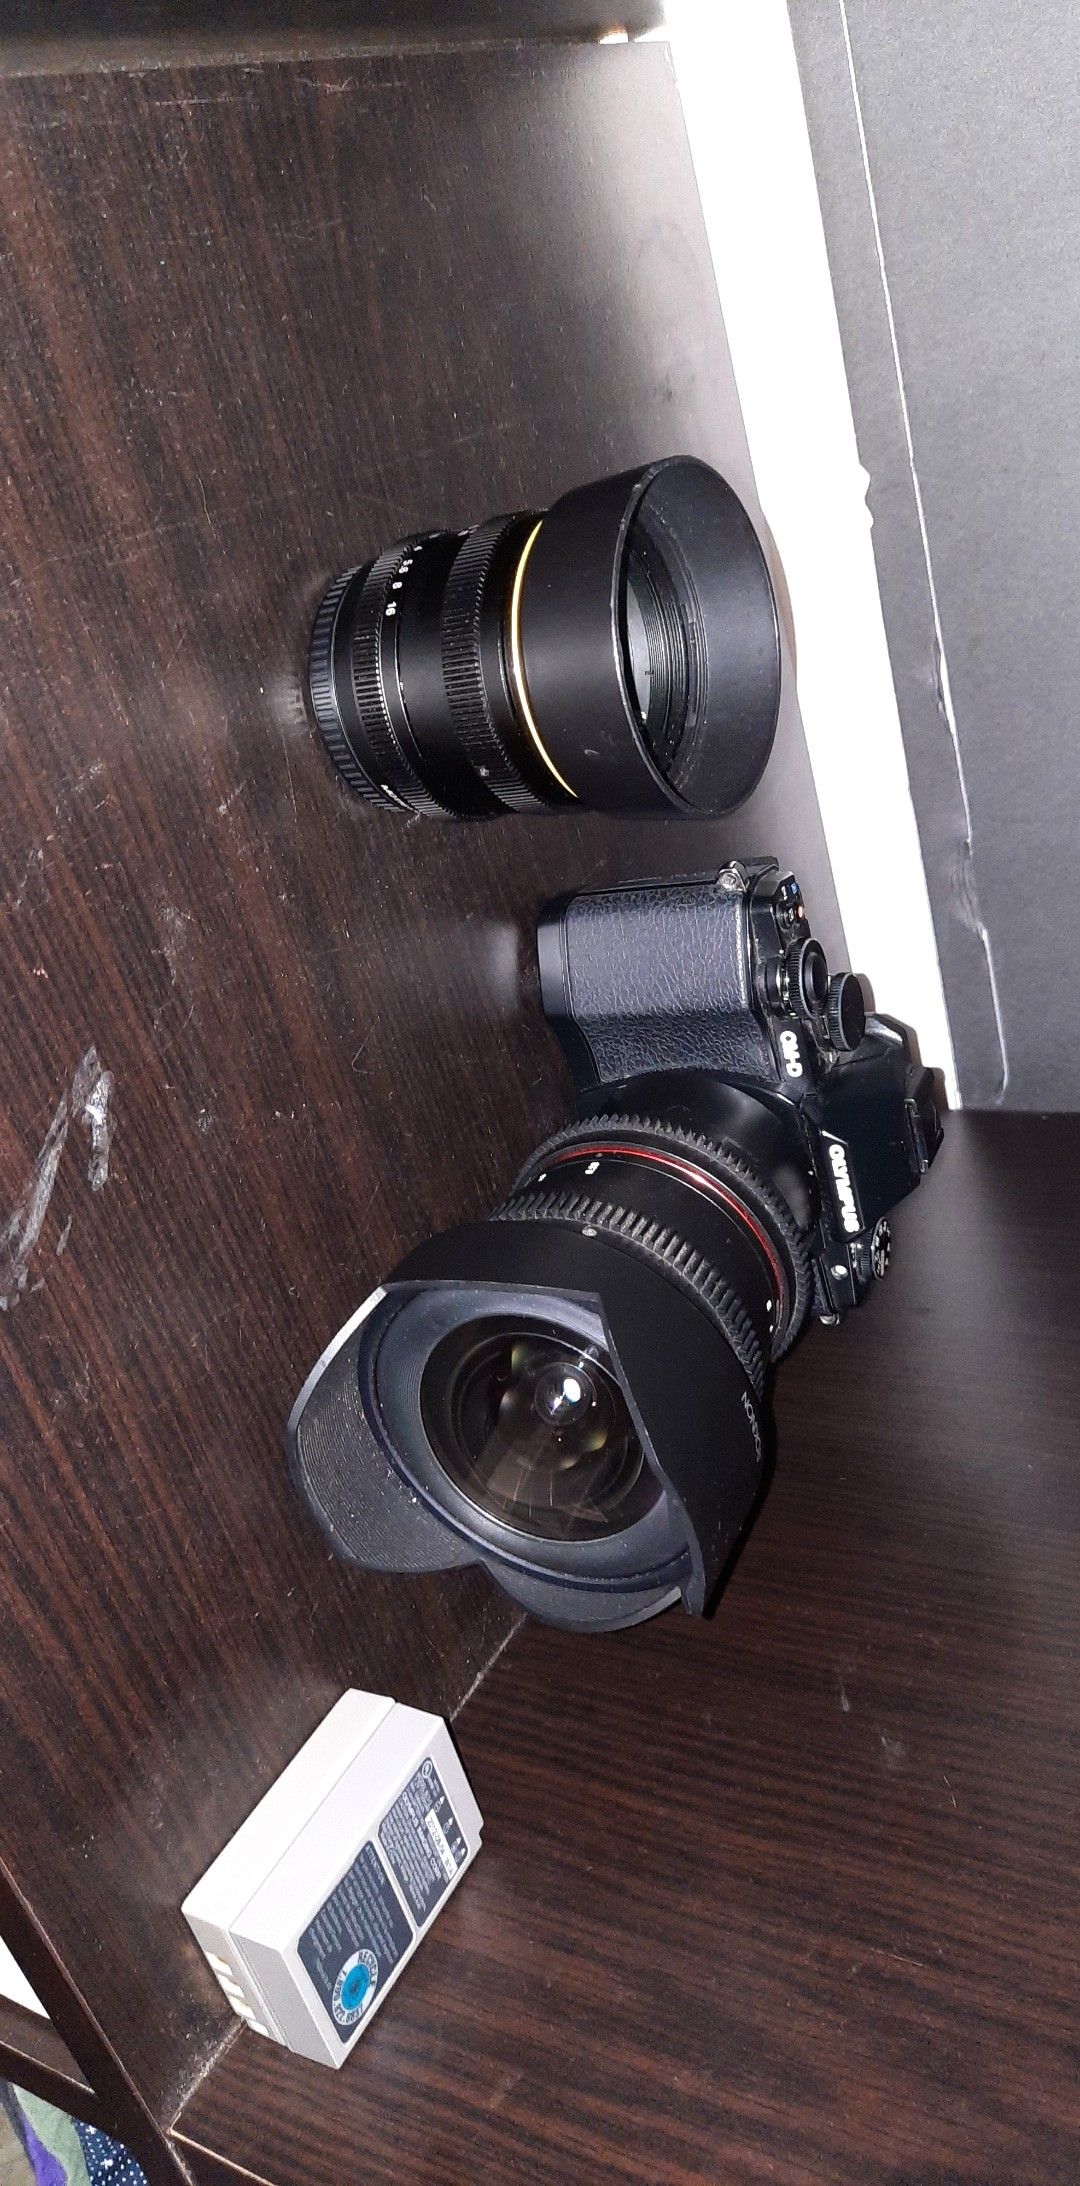 Olympus camera set